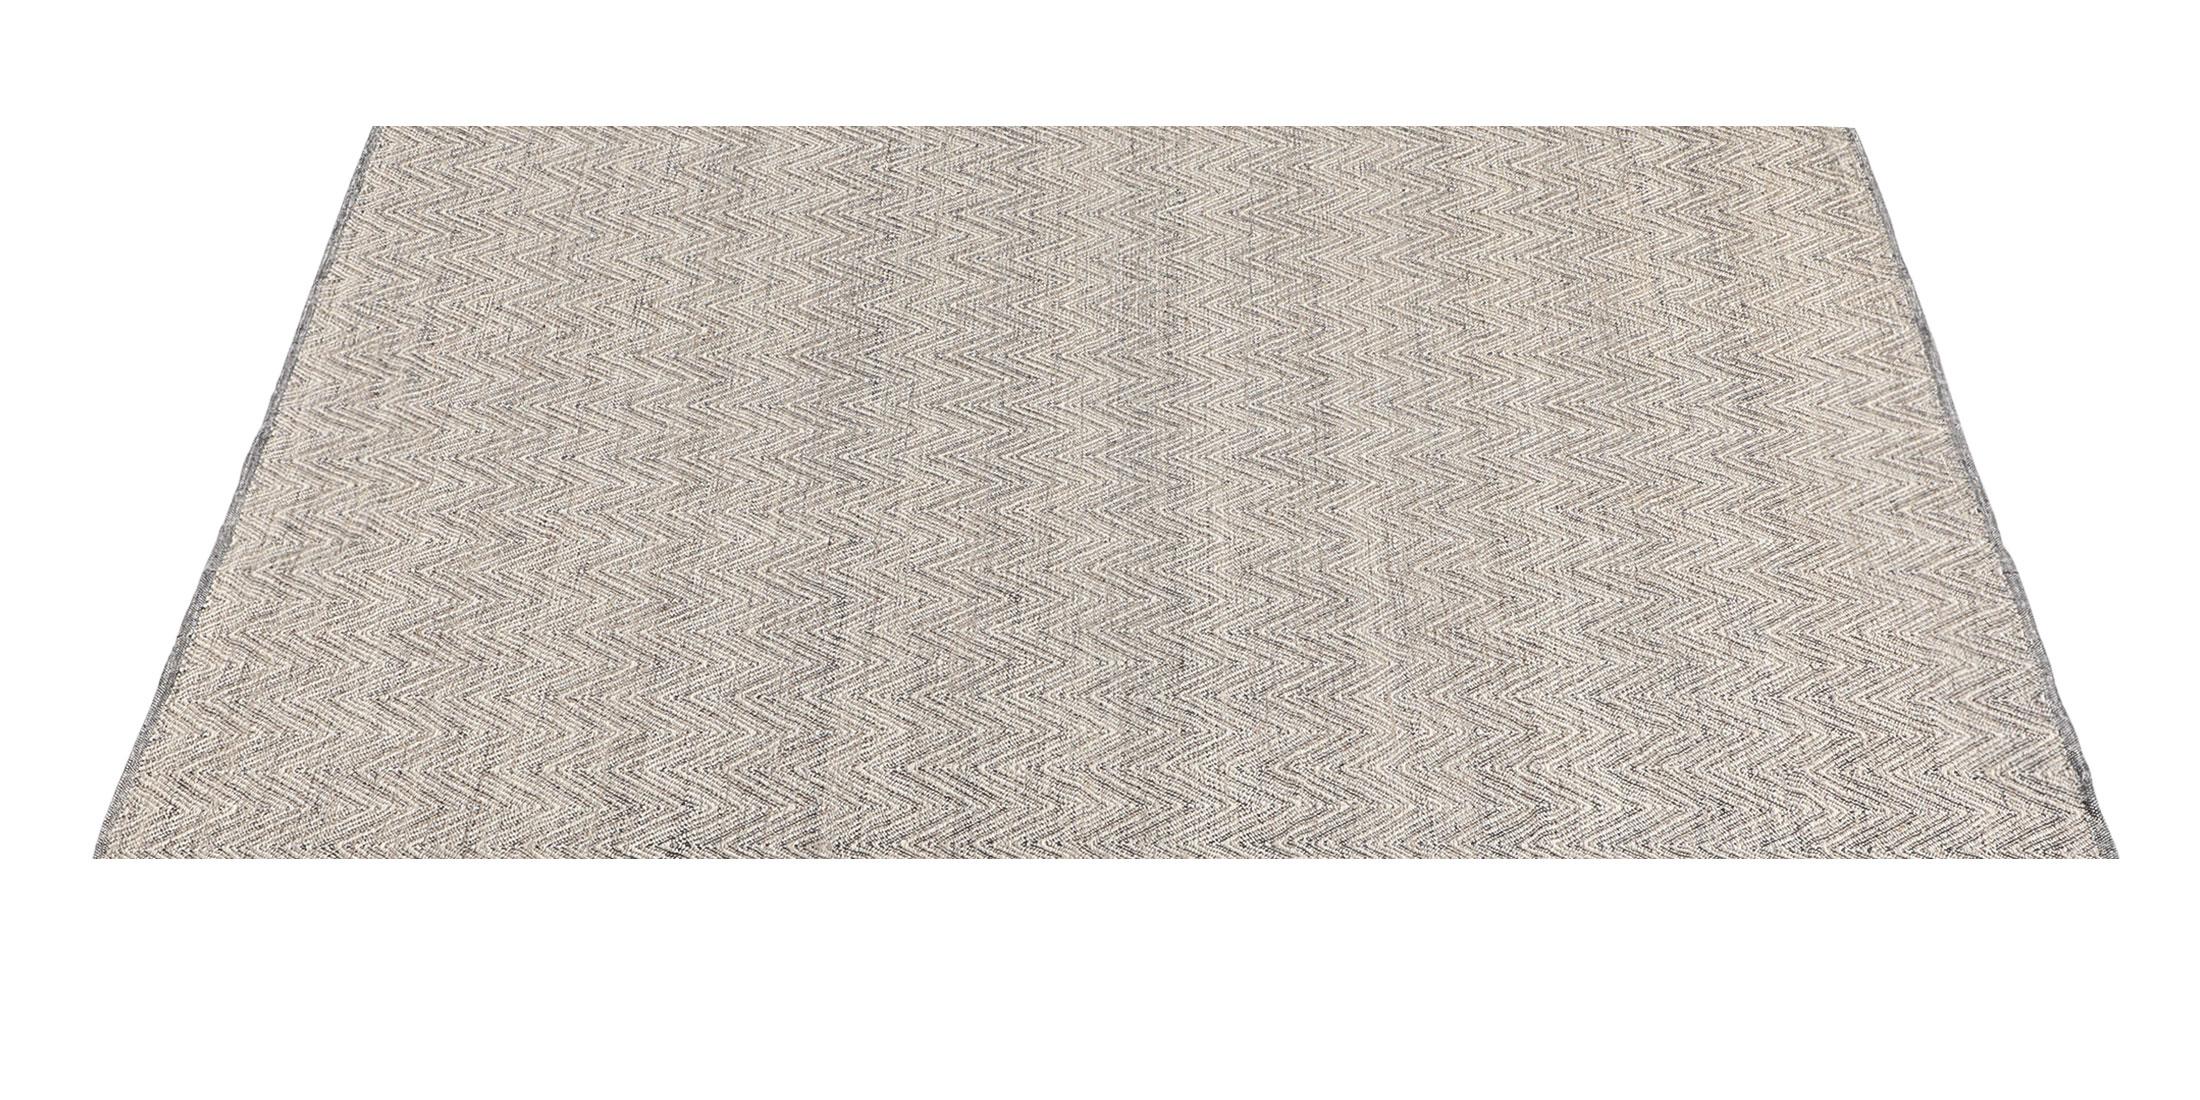 For Sale: Beige (Sand) Ben Soleimani Ceyah Rug– Hand-woven Plush Textured Wool + Linen Charcoal 12'x15' 2